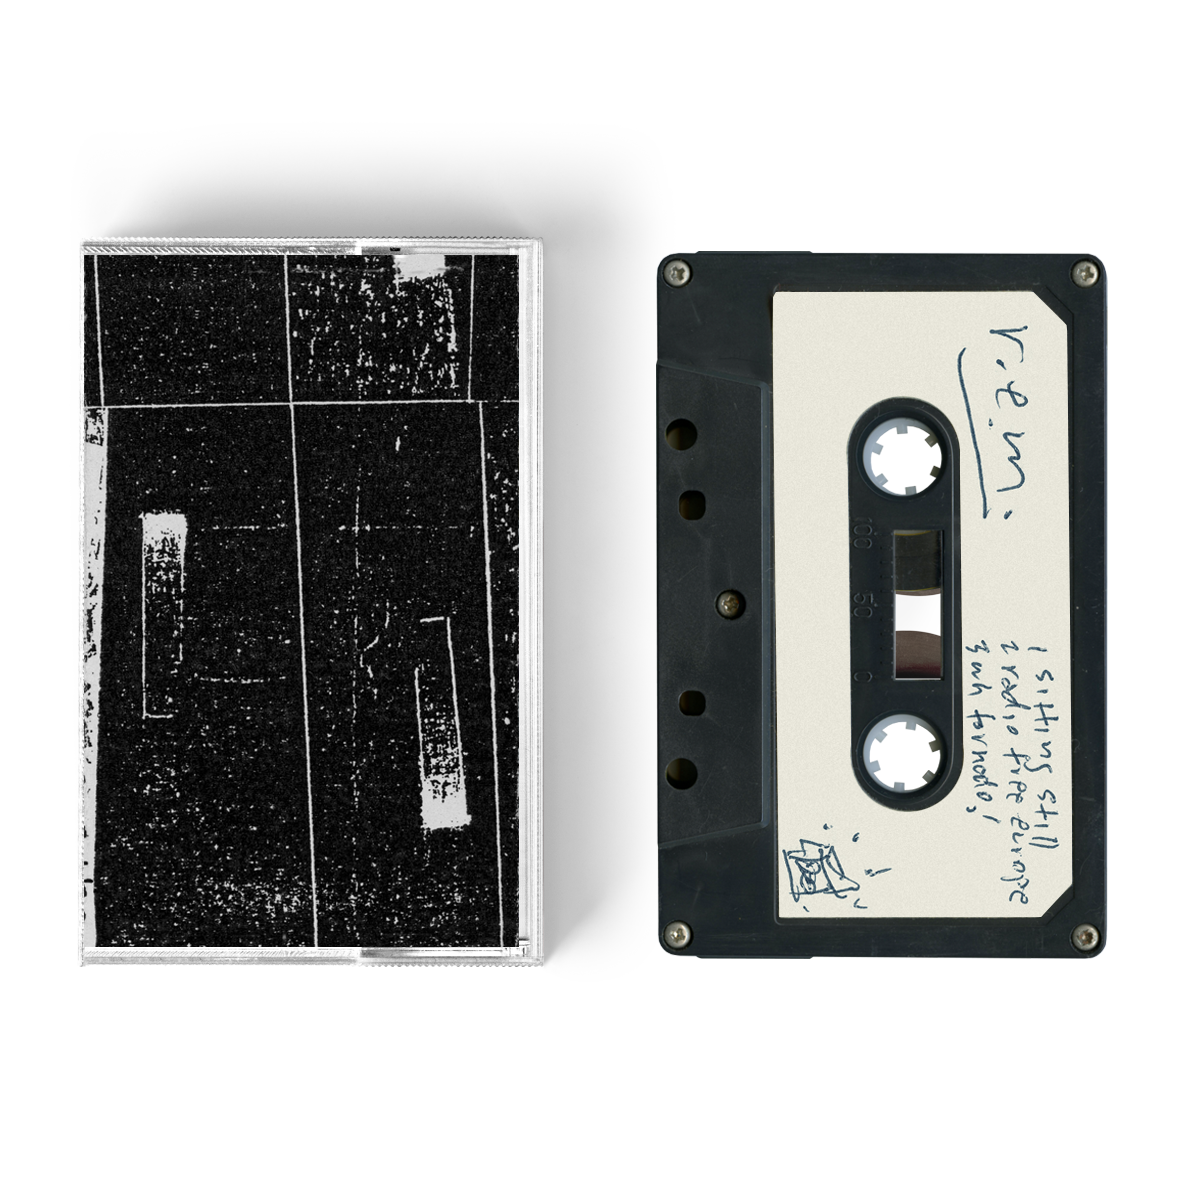 Cassette Set: 1981 Demonstration Tape (Cassette - Limited Edition)